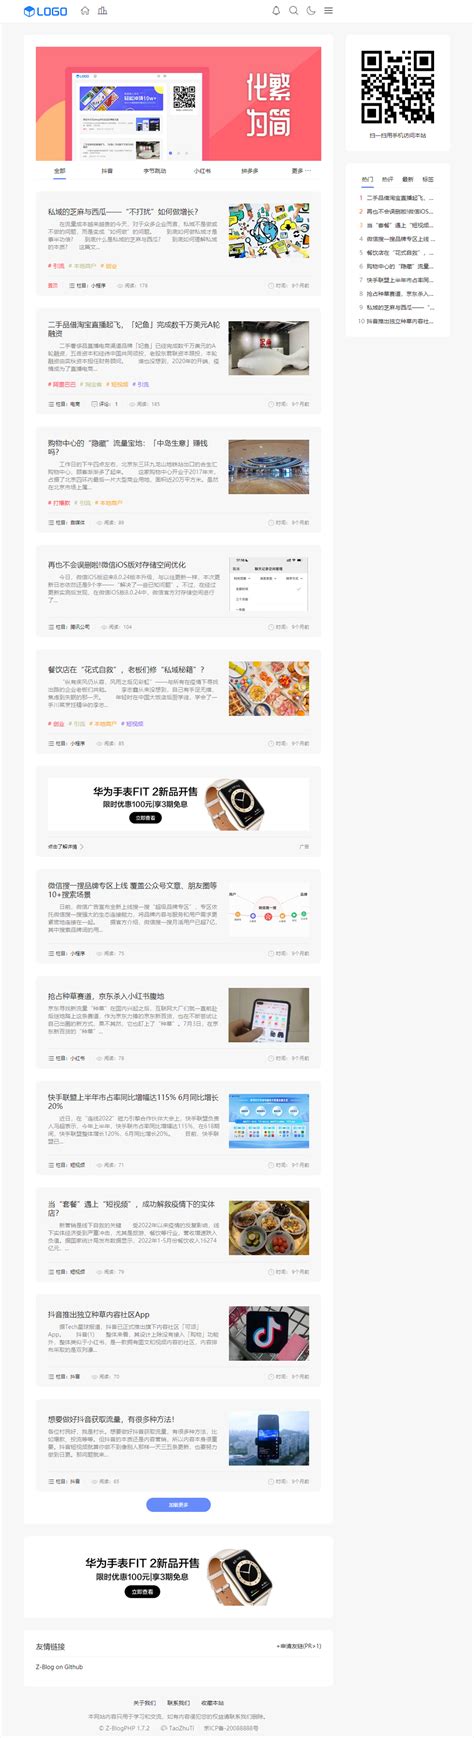 zblog博客seo插件